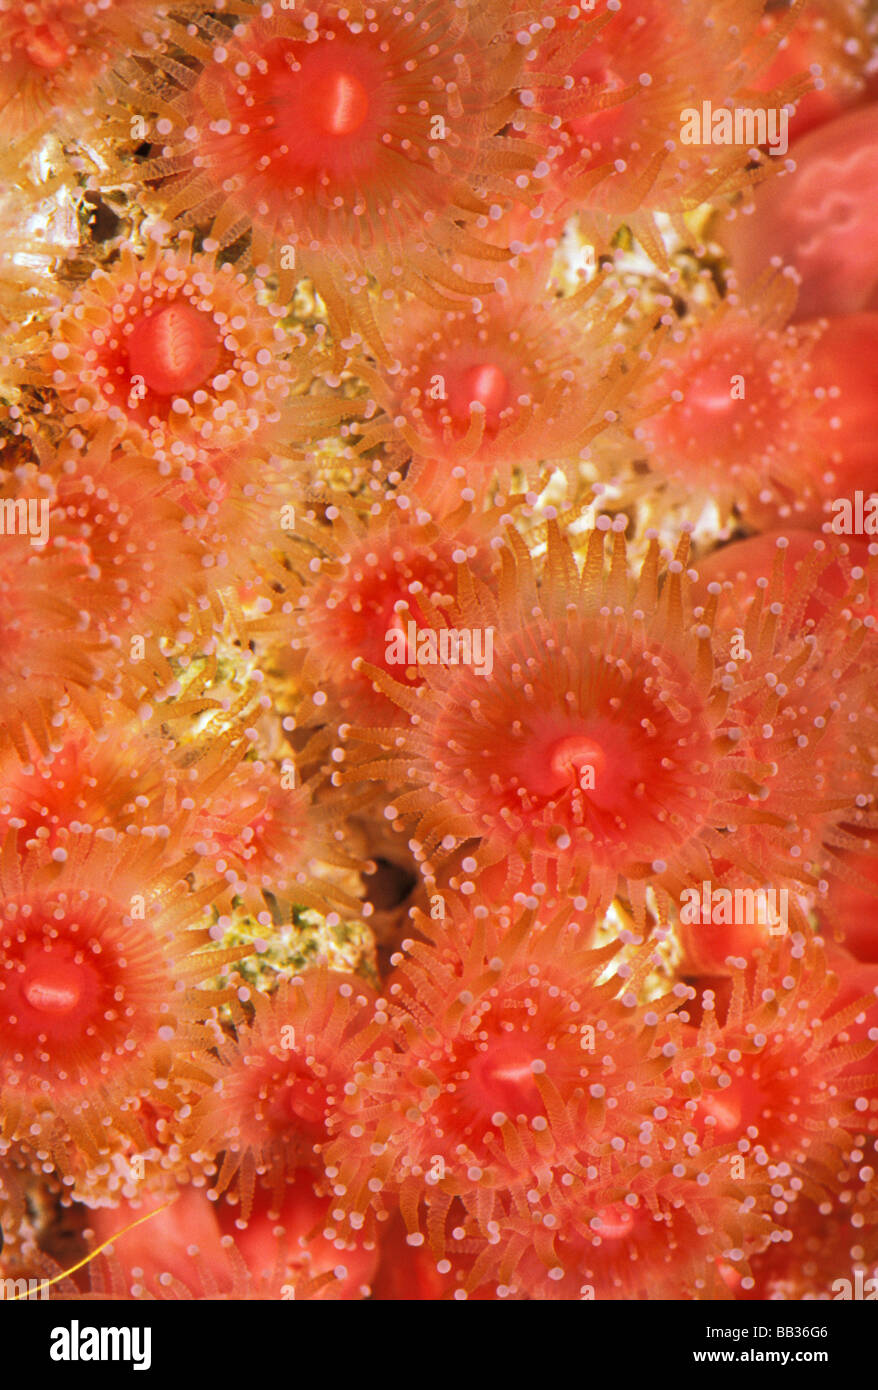 Strawberry anemone, corynactis californica. Stock Photo